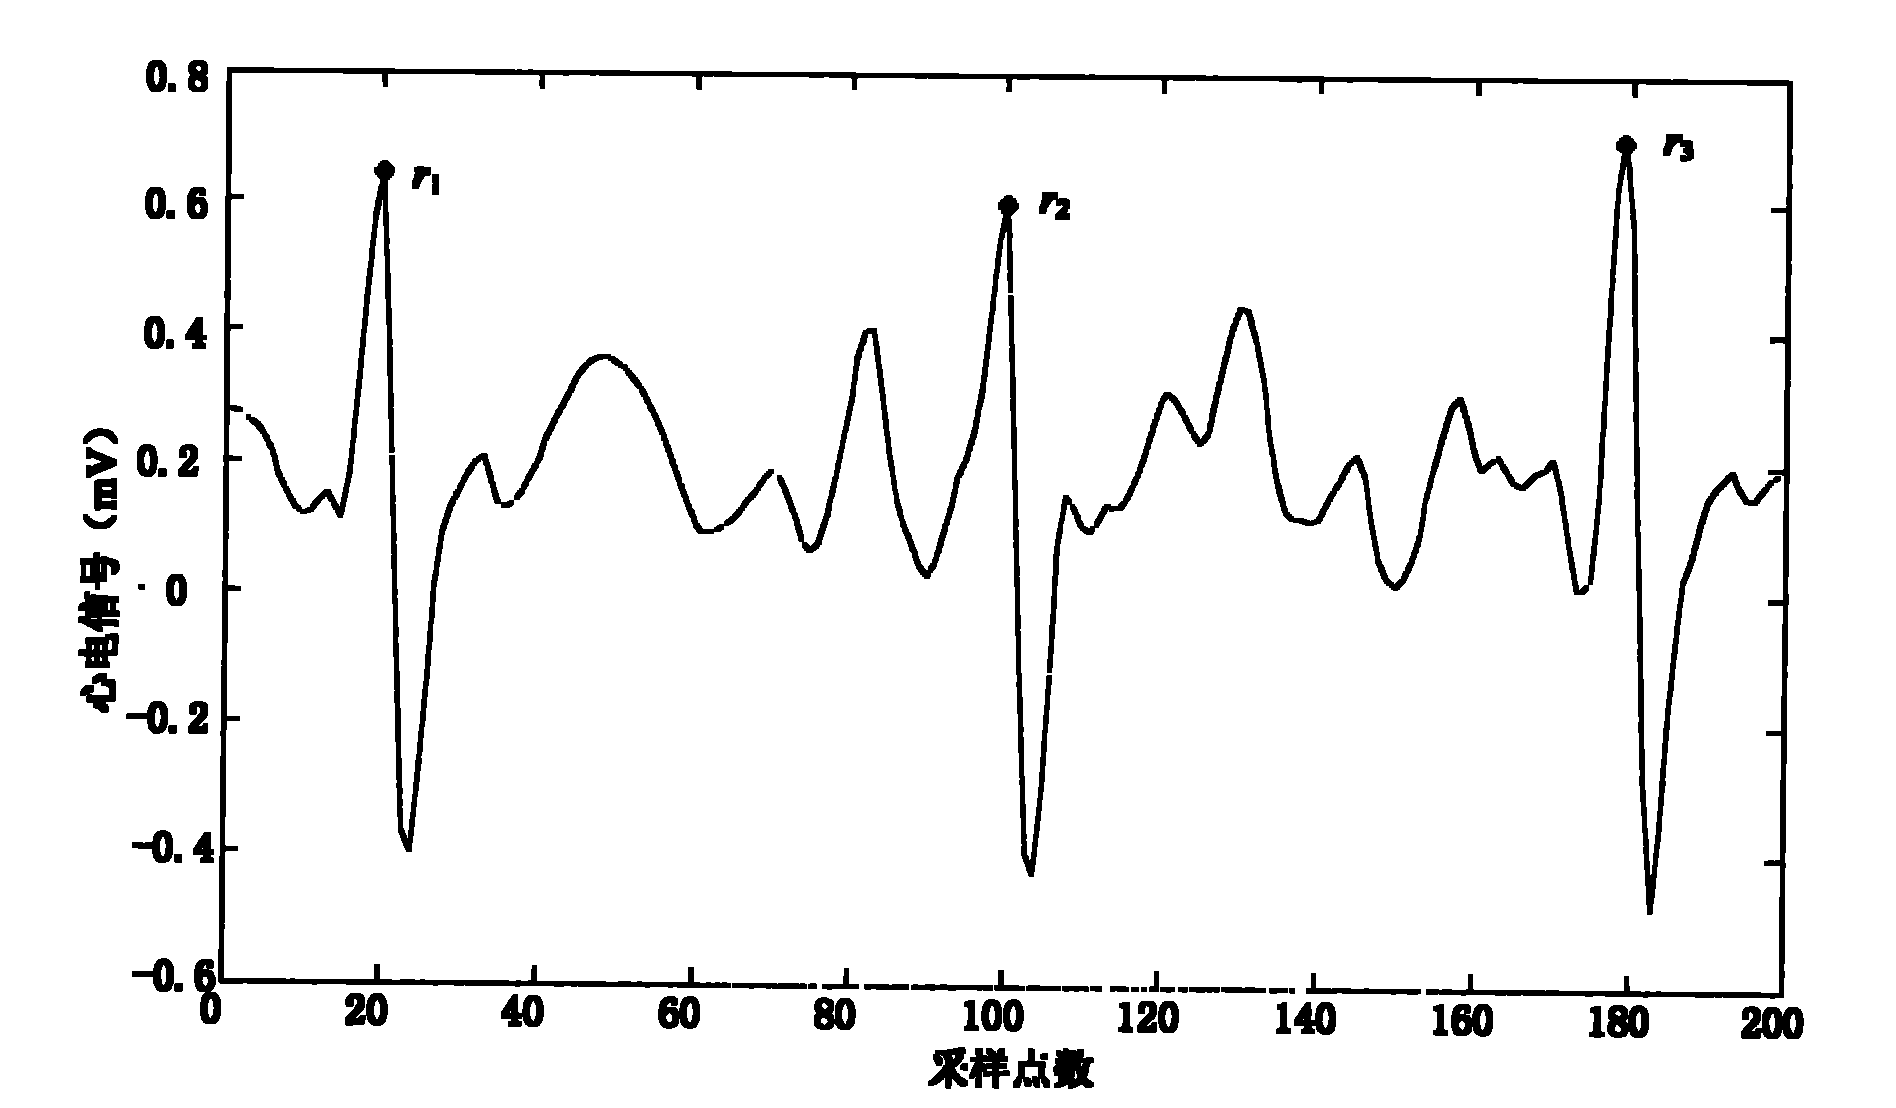 Electrocardiosignal R peak detection method based on waveform characteristic matching